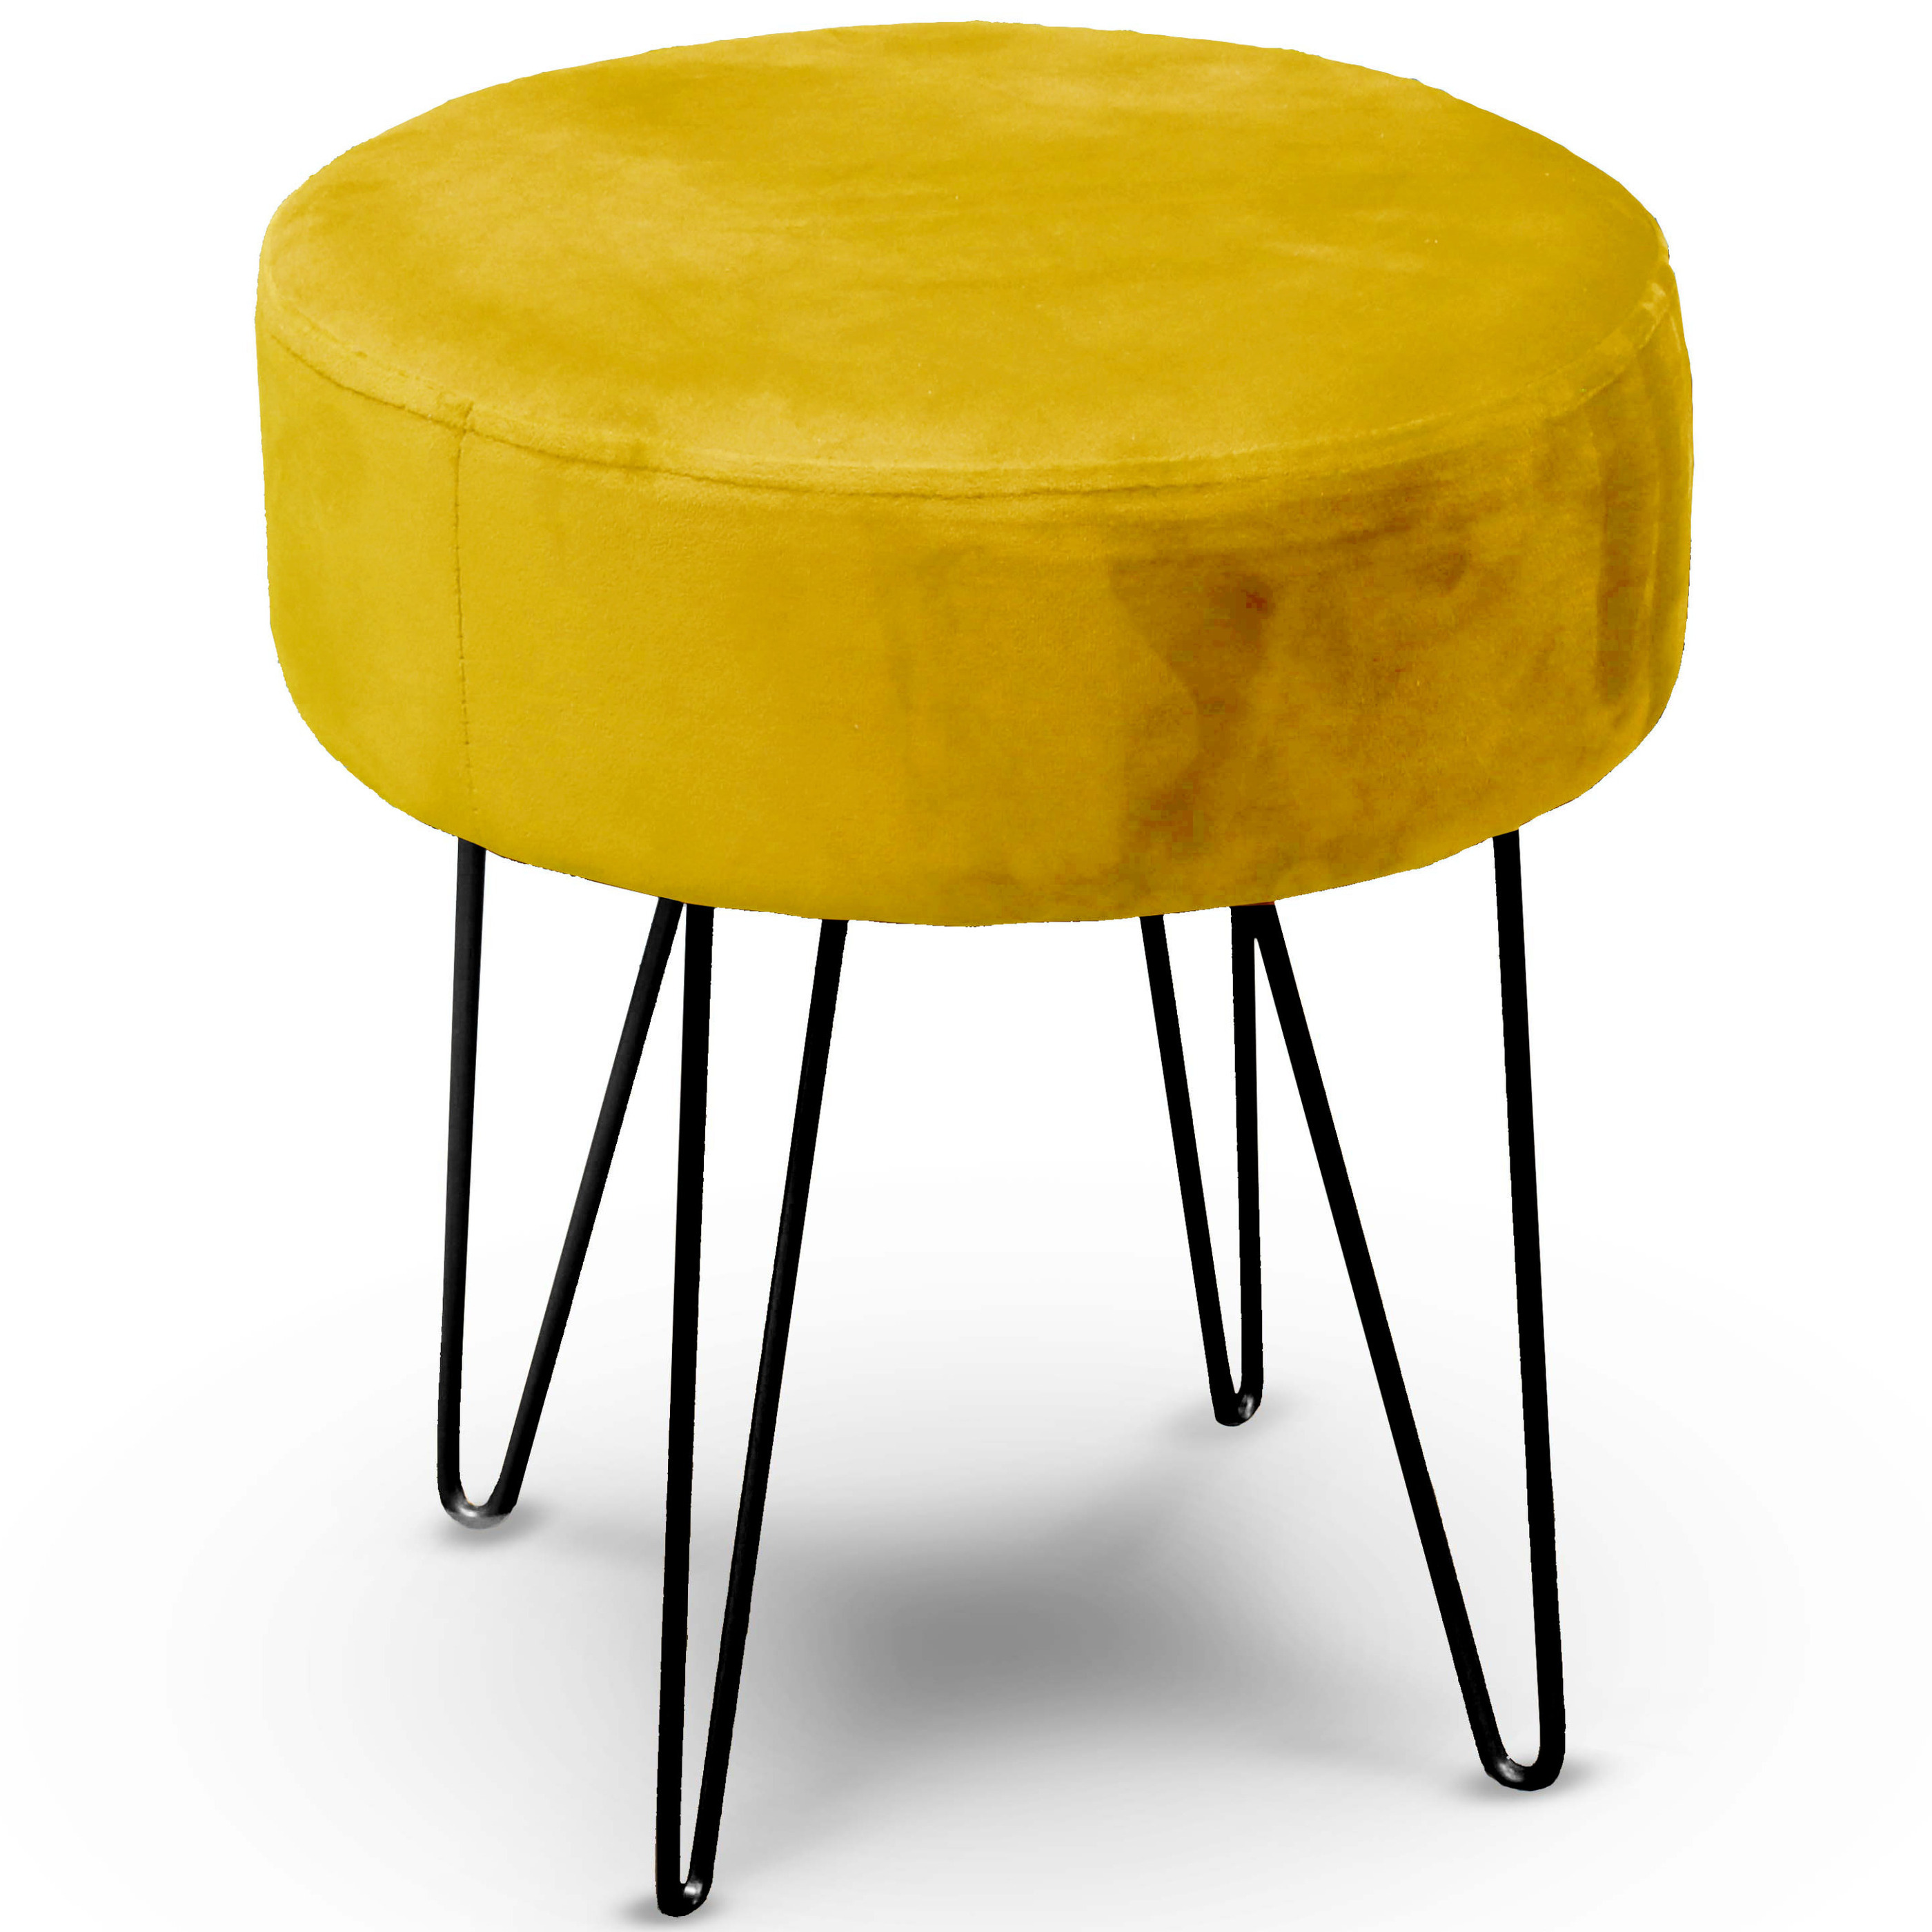 Velvet kruk Davy oker geel metaal-stof D35 x H40 cm bijzet stoeltjes